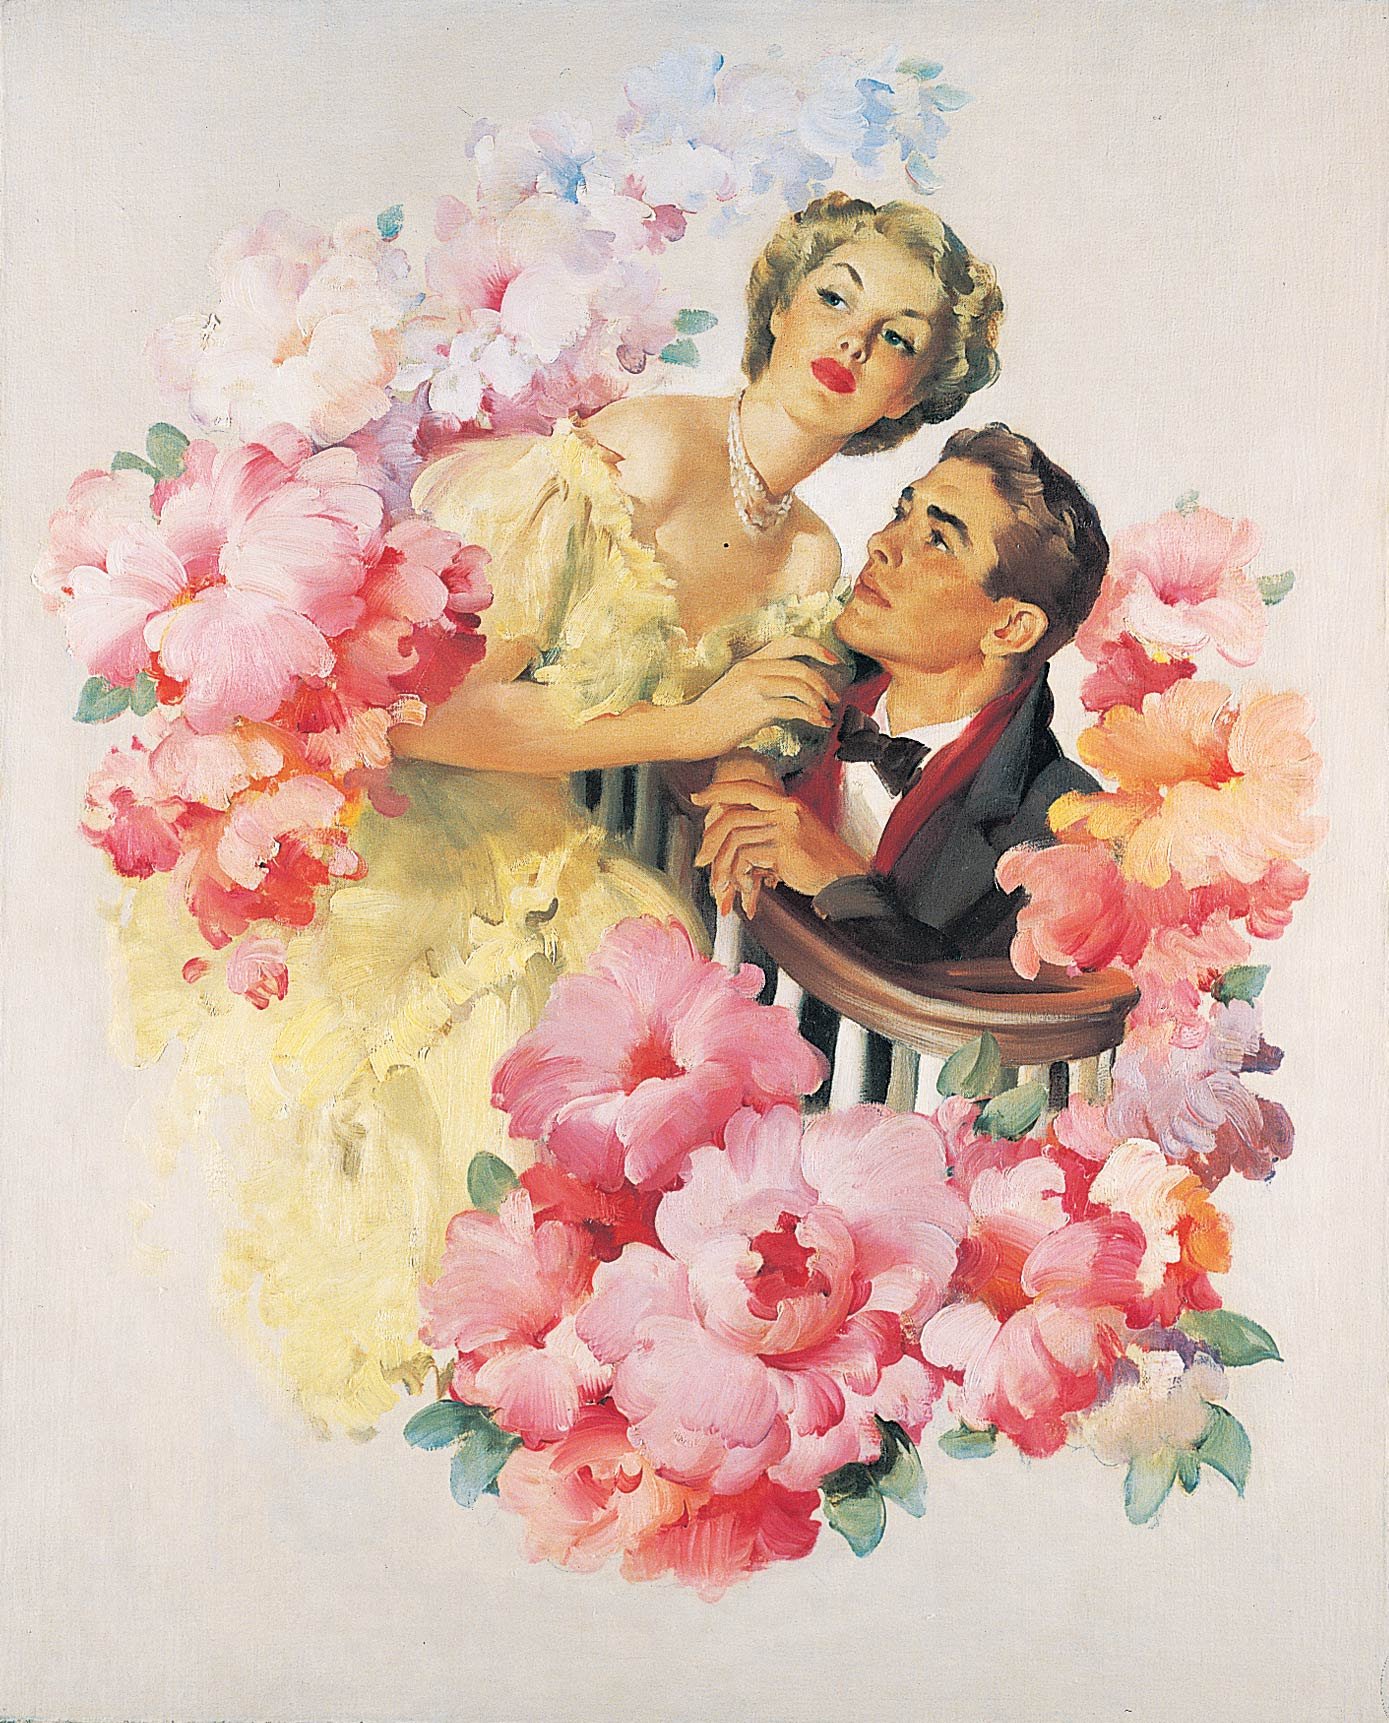   Haddon Sundblom (1899-1976)   Cashmere Soap Advertisement  c. 1946-1951, oil on canvas 37” x 30” Cashmere Bouquet Soap advertisement 